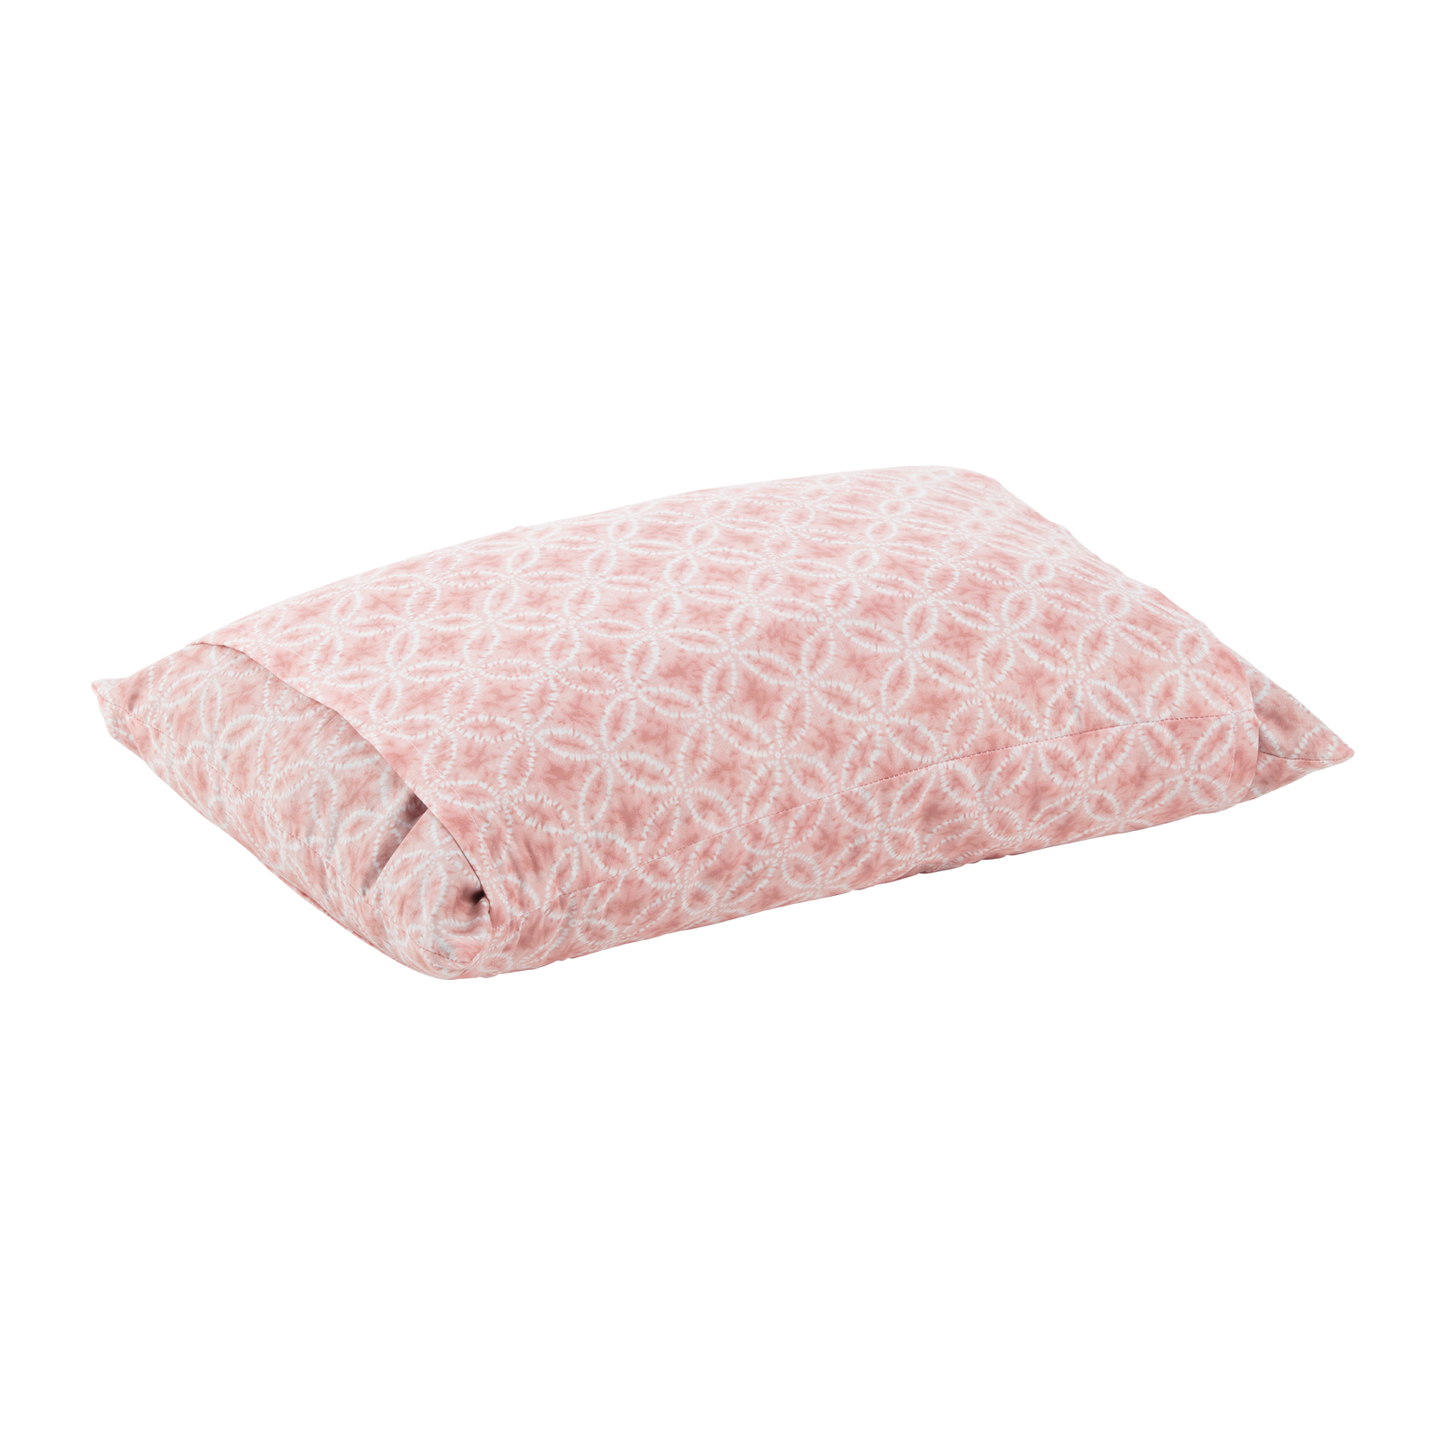 J-Life Taidai Pink Buckwheat Hull Pillow_Pillows & Shams